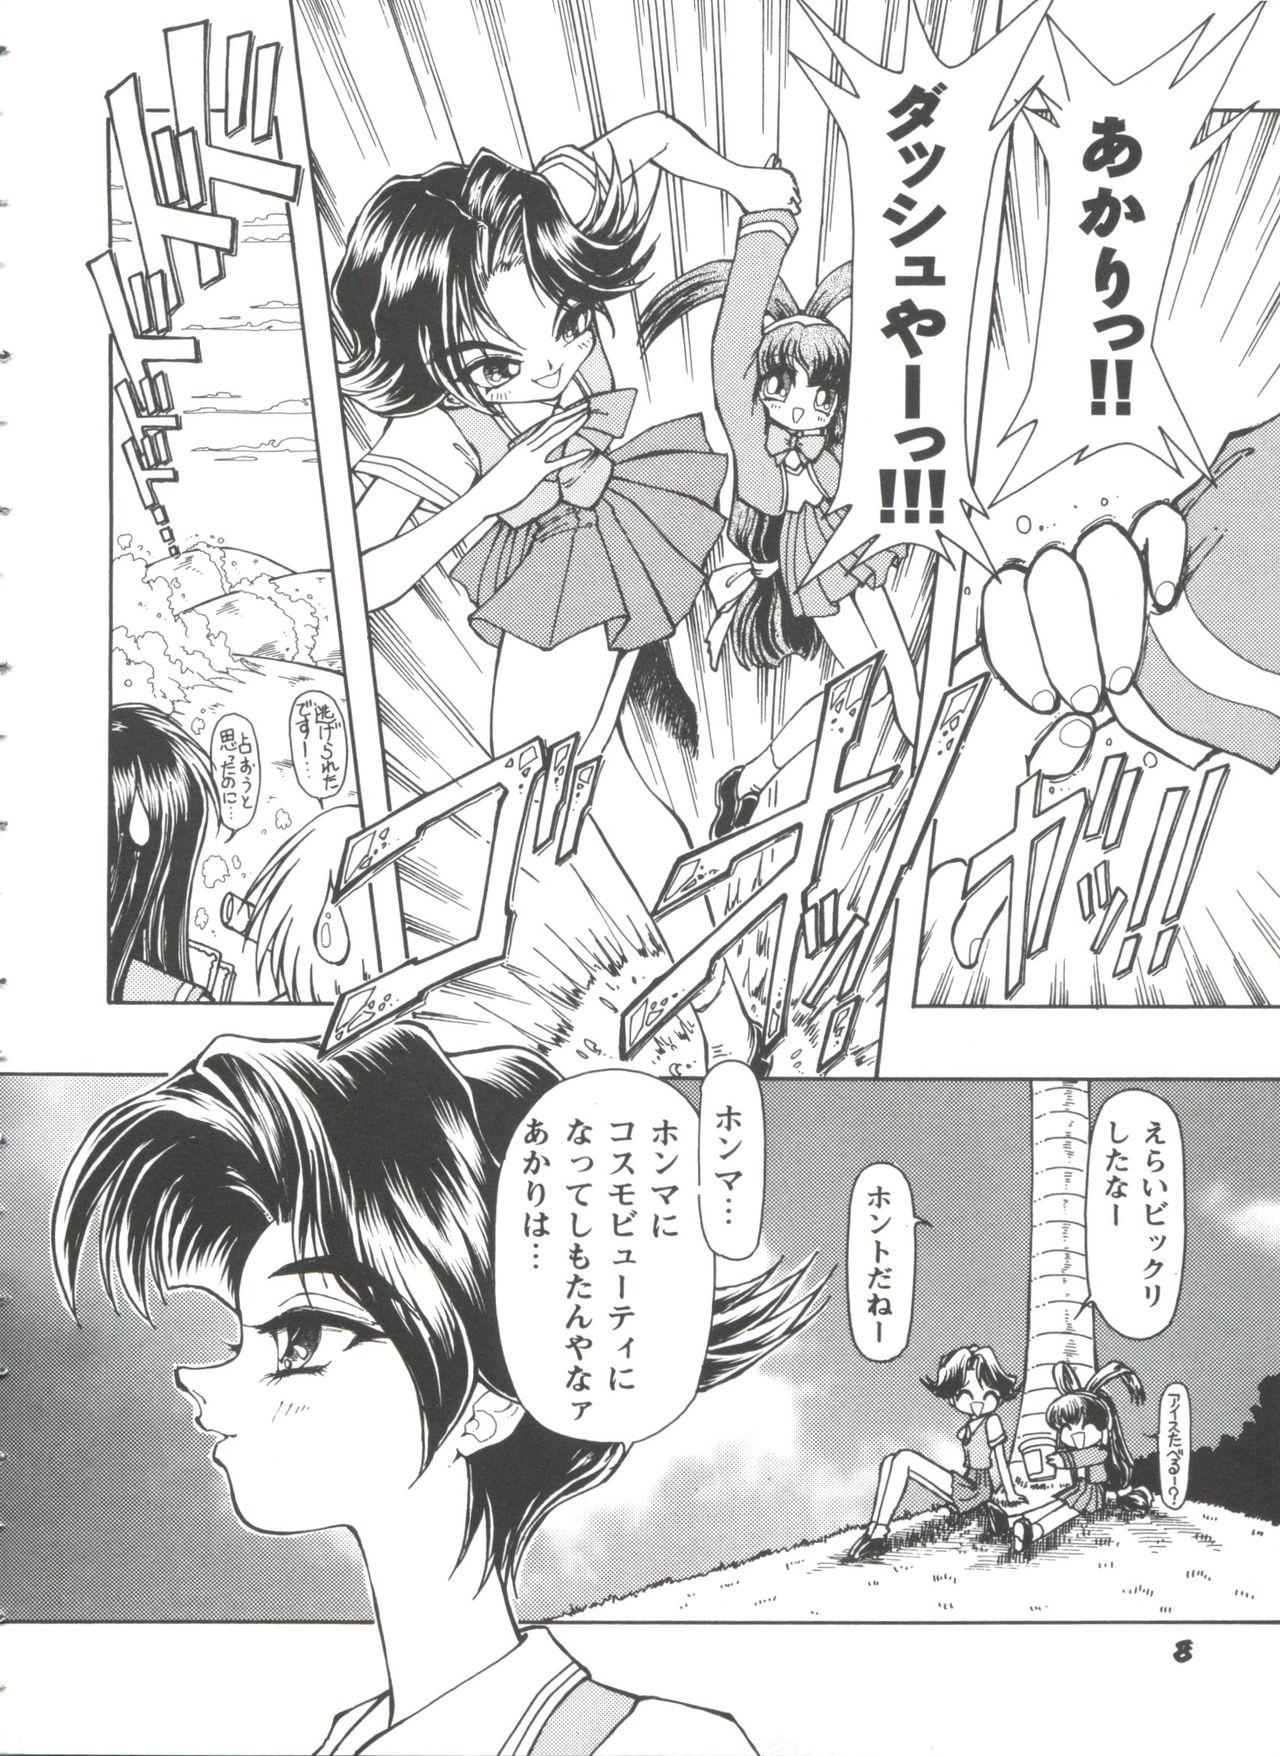 Butt Girl's Parade 98 Take 10 - Street fighter Darkstalkers Sakura taisen Battle athletes Akihabara dennou gumi Sfm - Page 9